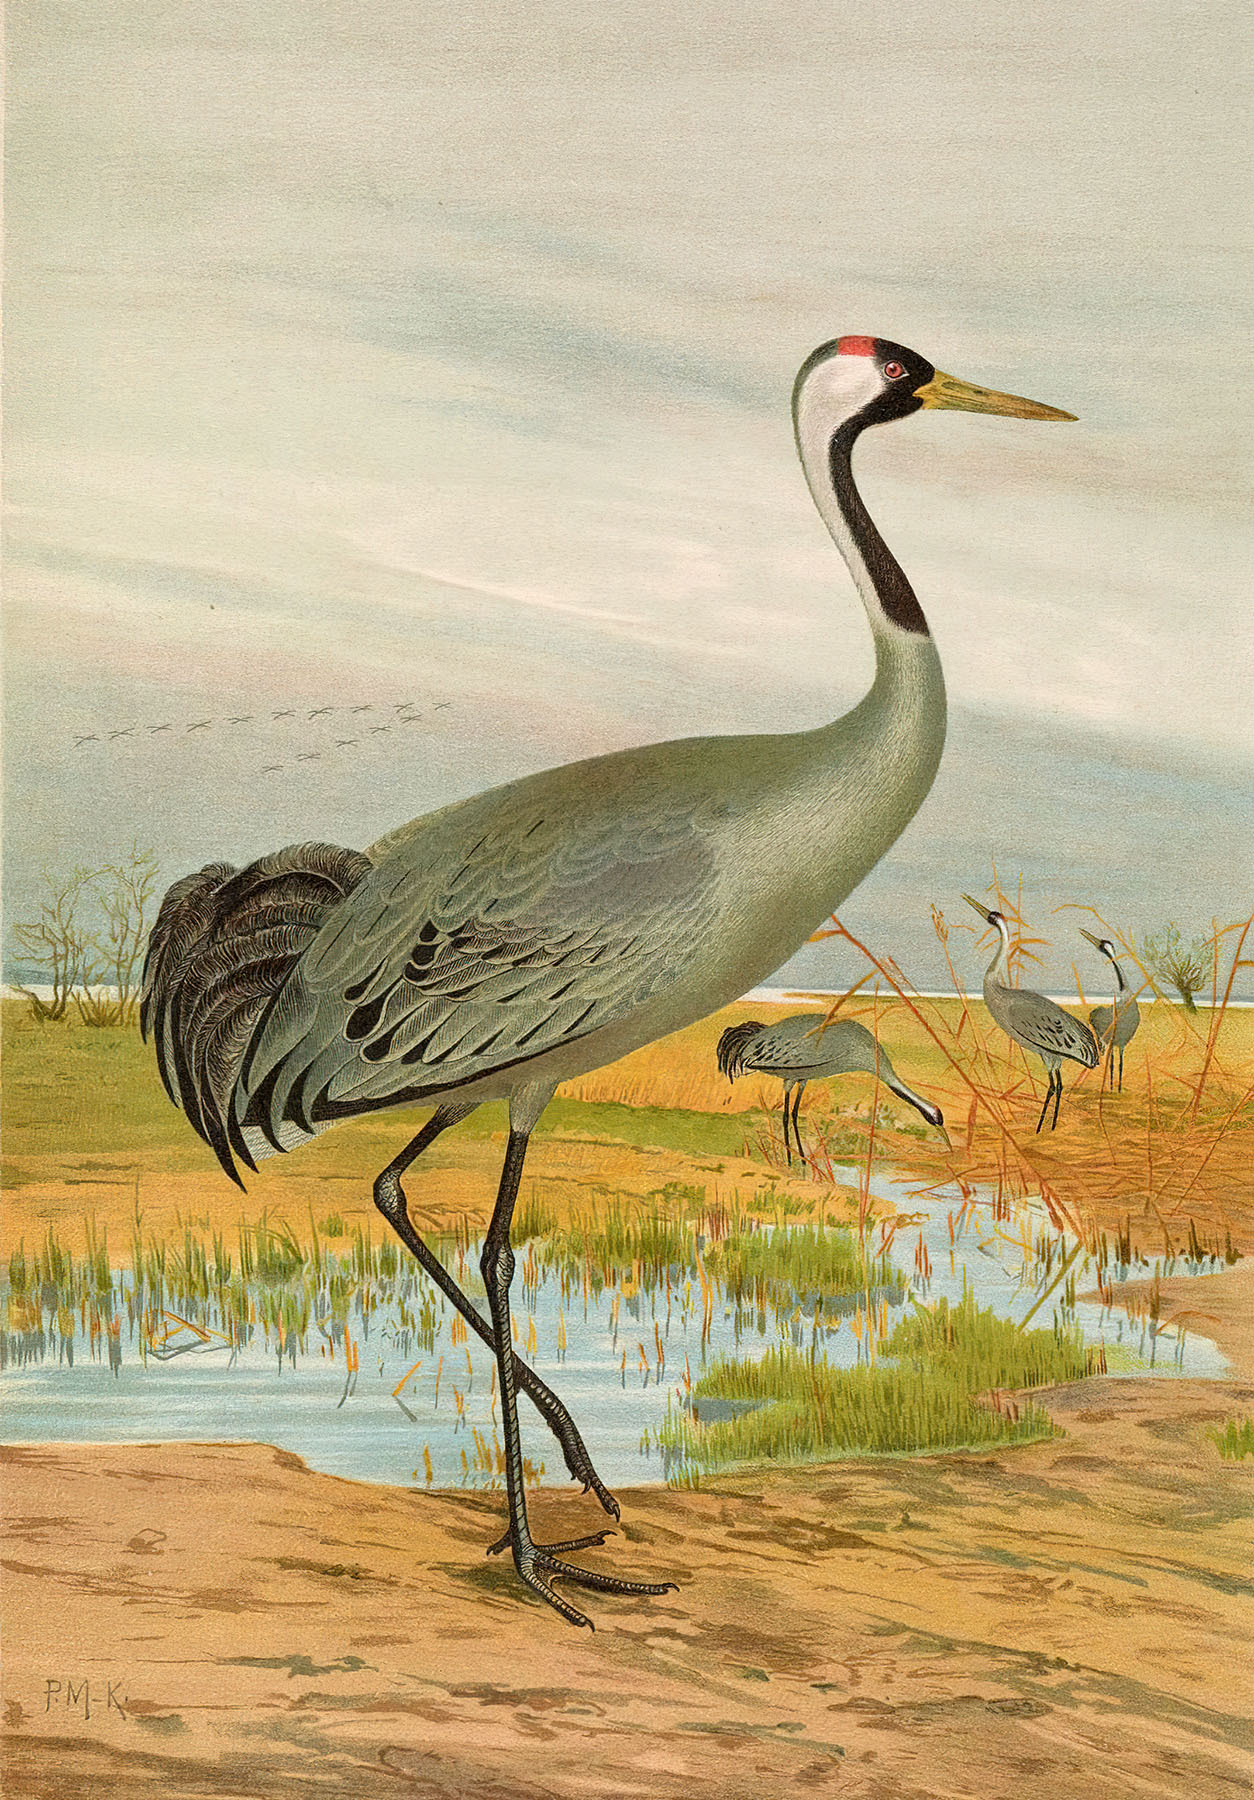 Crane Bird Image in Marsh